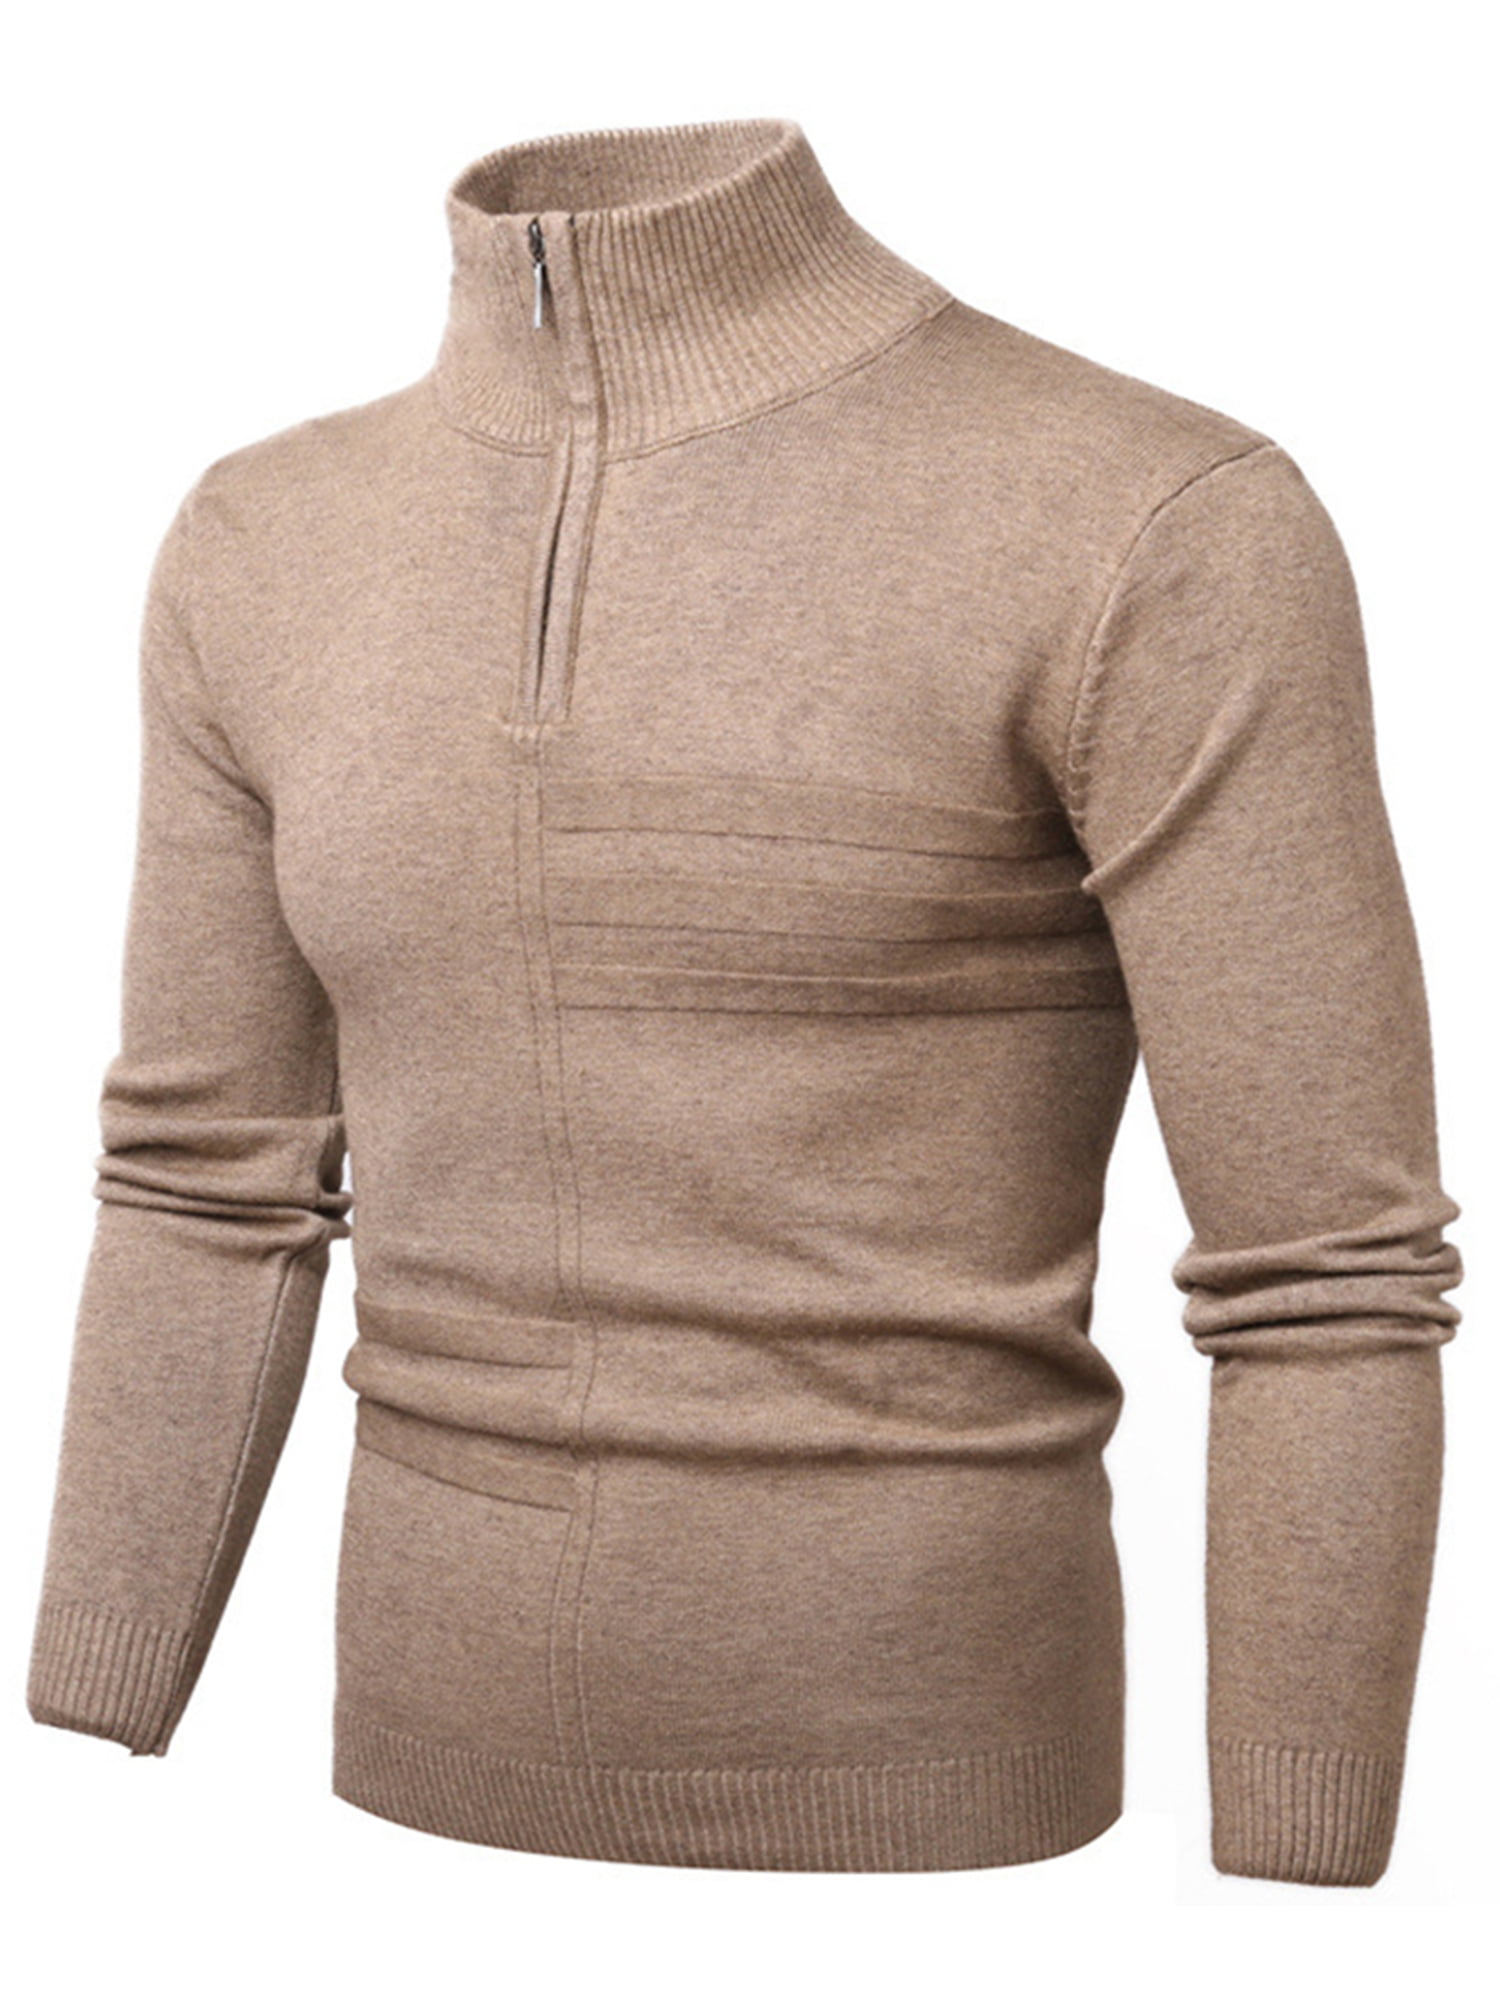 Men V Neck Solid Color Knitwear V-Neck Long Sleeve Sweater Pullover Shirt Autumn